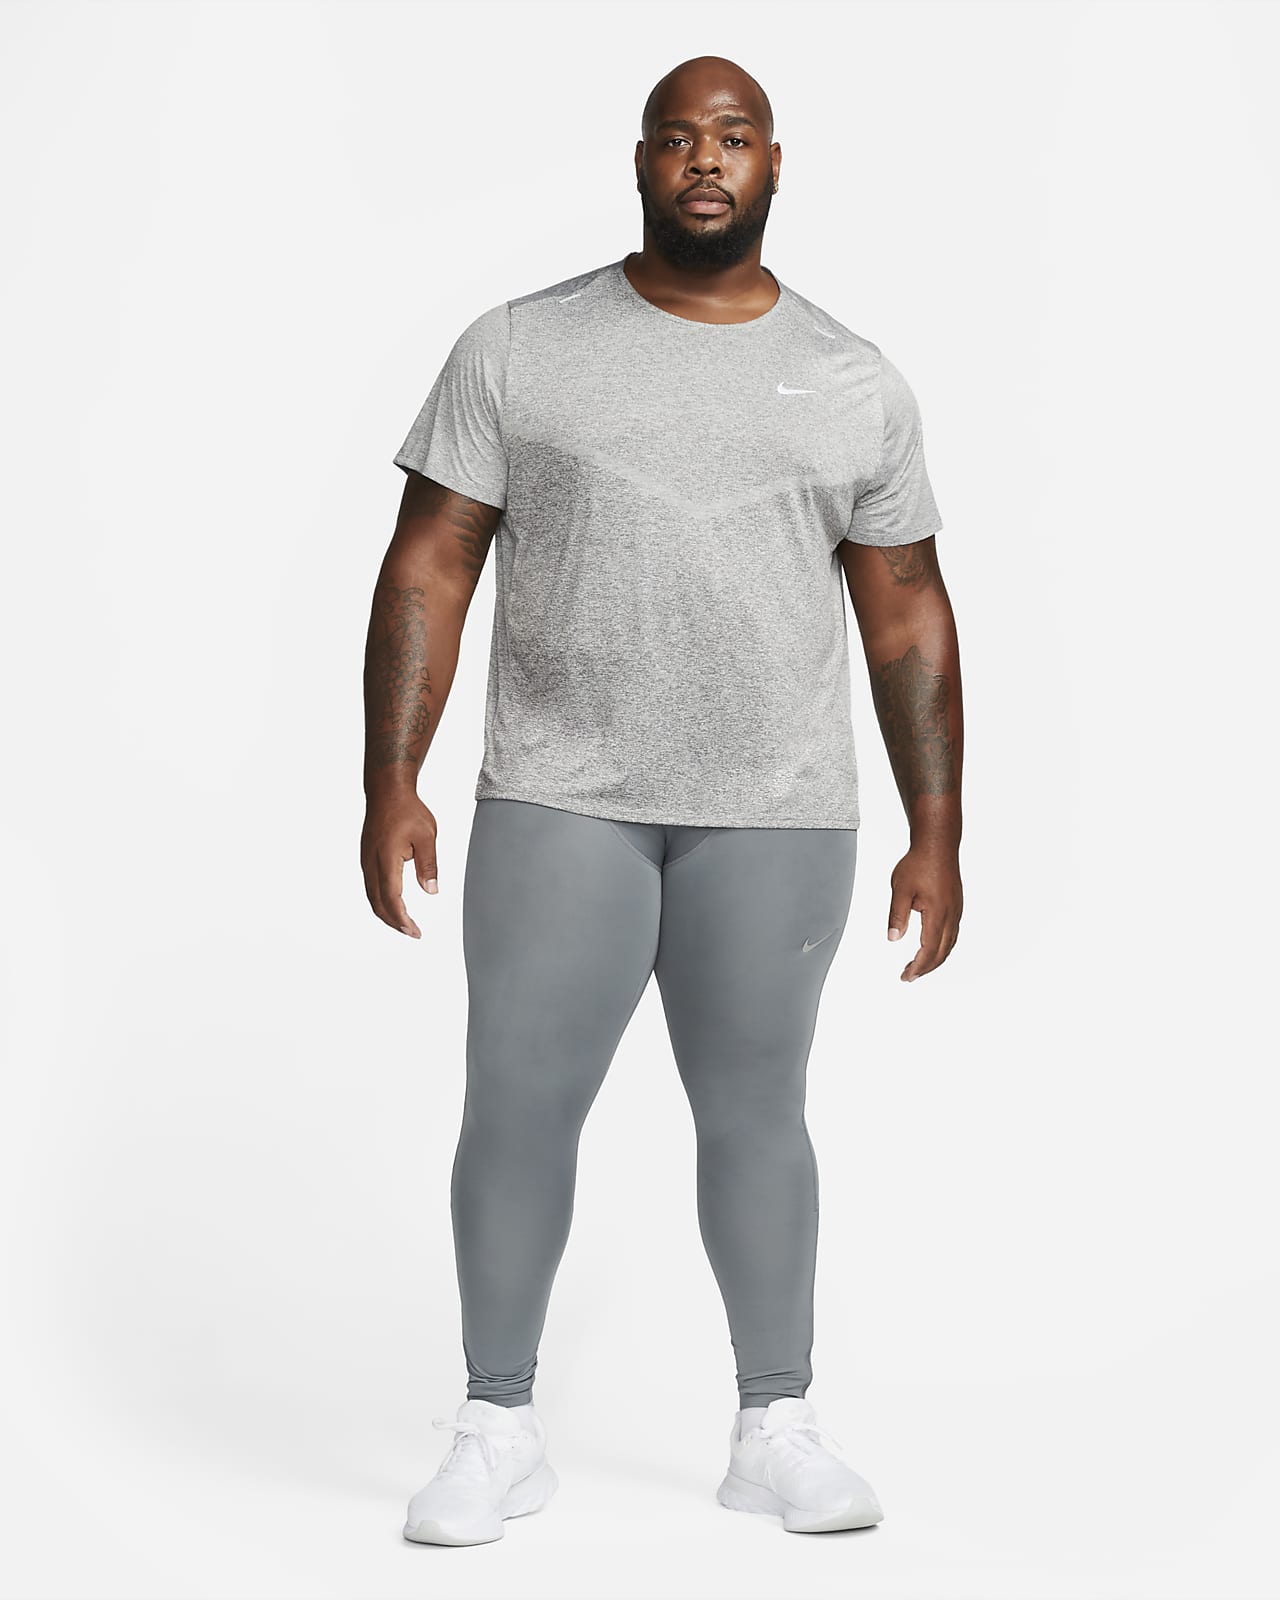 Nike Repel Challenger Tight Men - Olive, Grey, DD6700-326